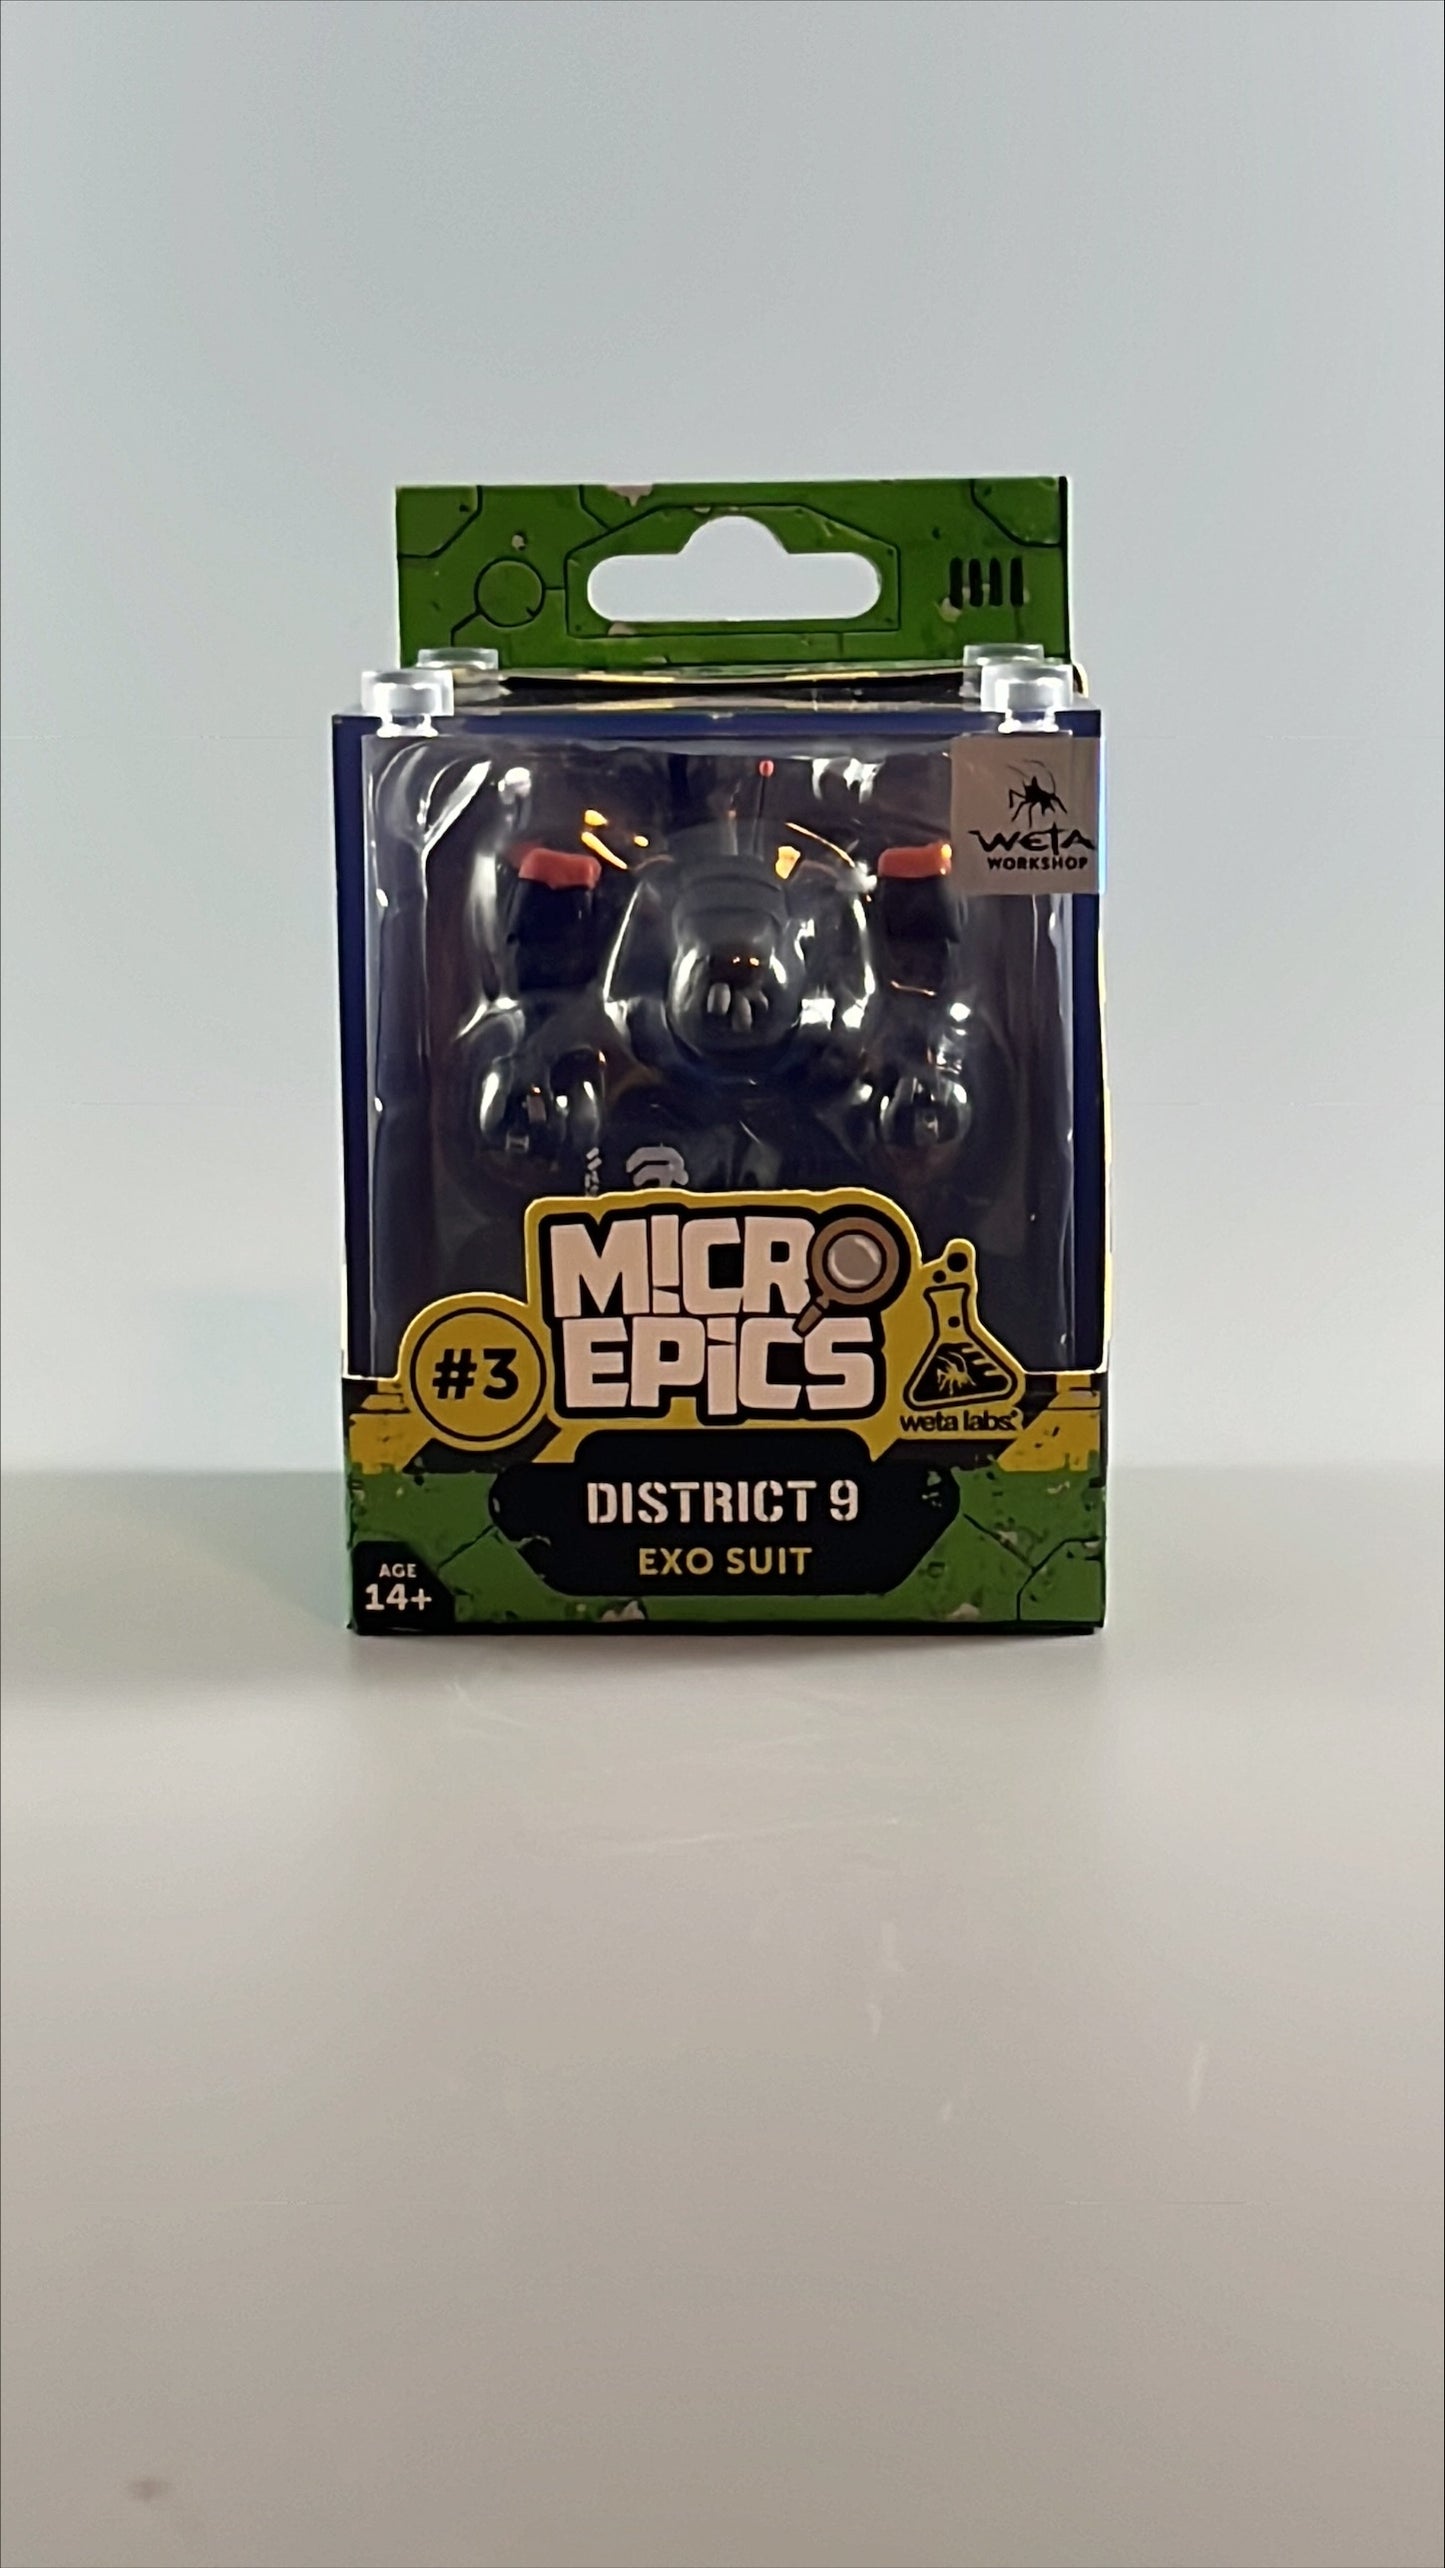 Weta Workshop Micro Epics #3 - District 9 Exo Suit